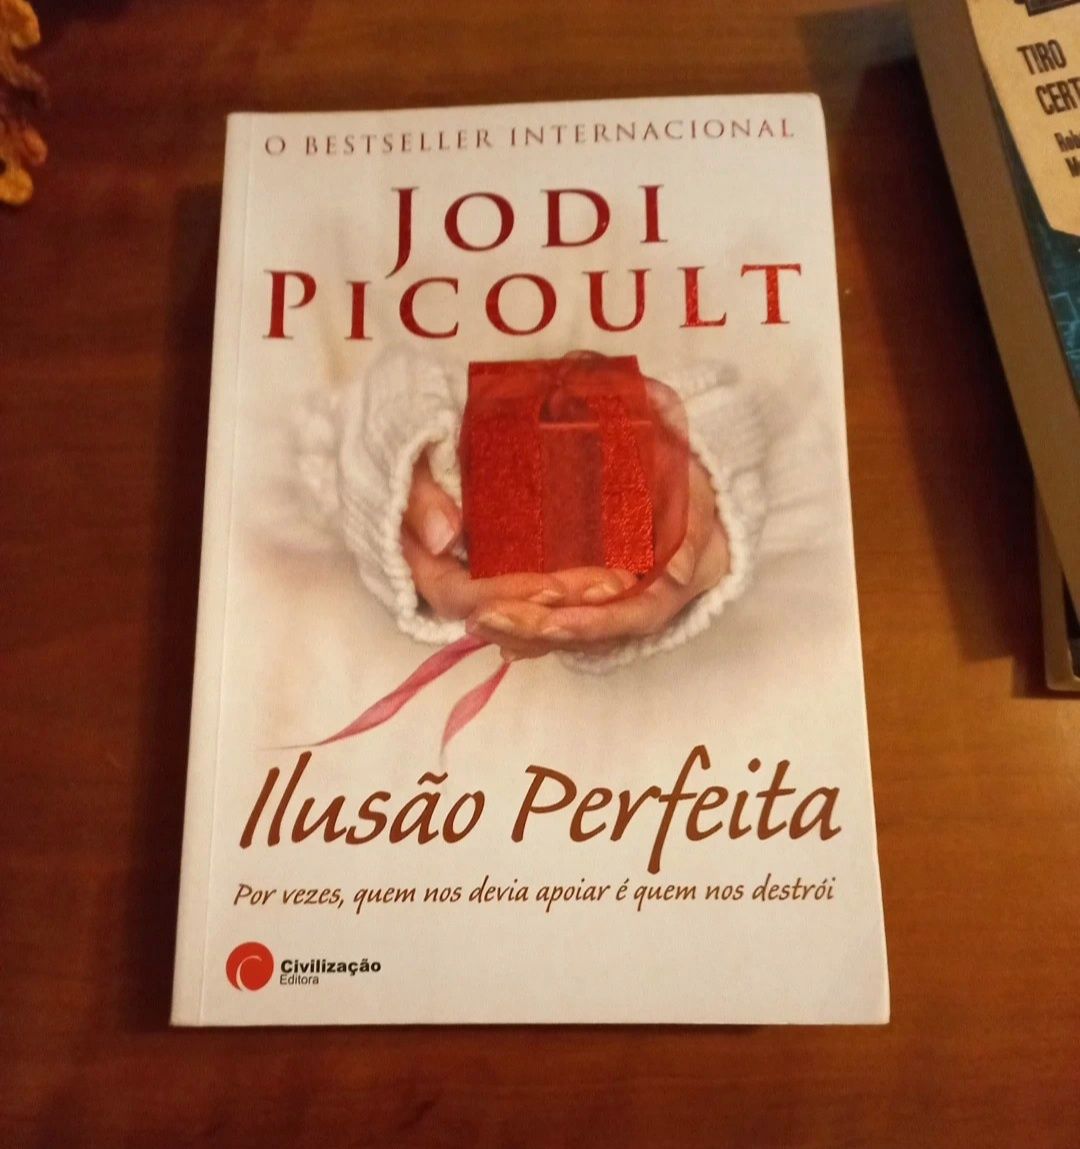 Jodi Picoult - "Ilusão Perfeita "